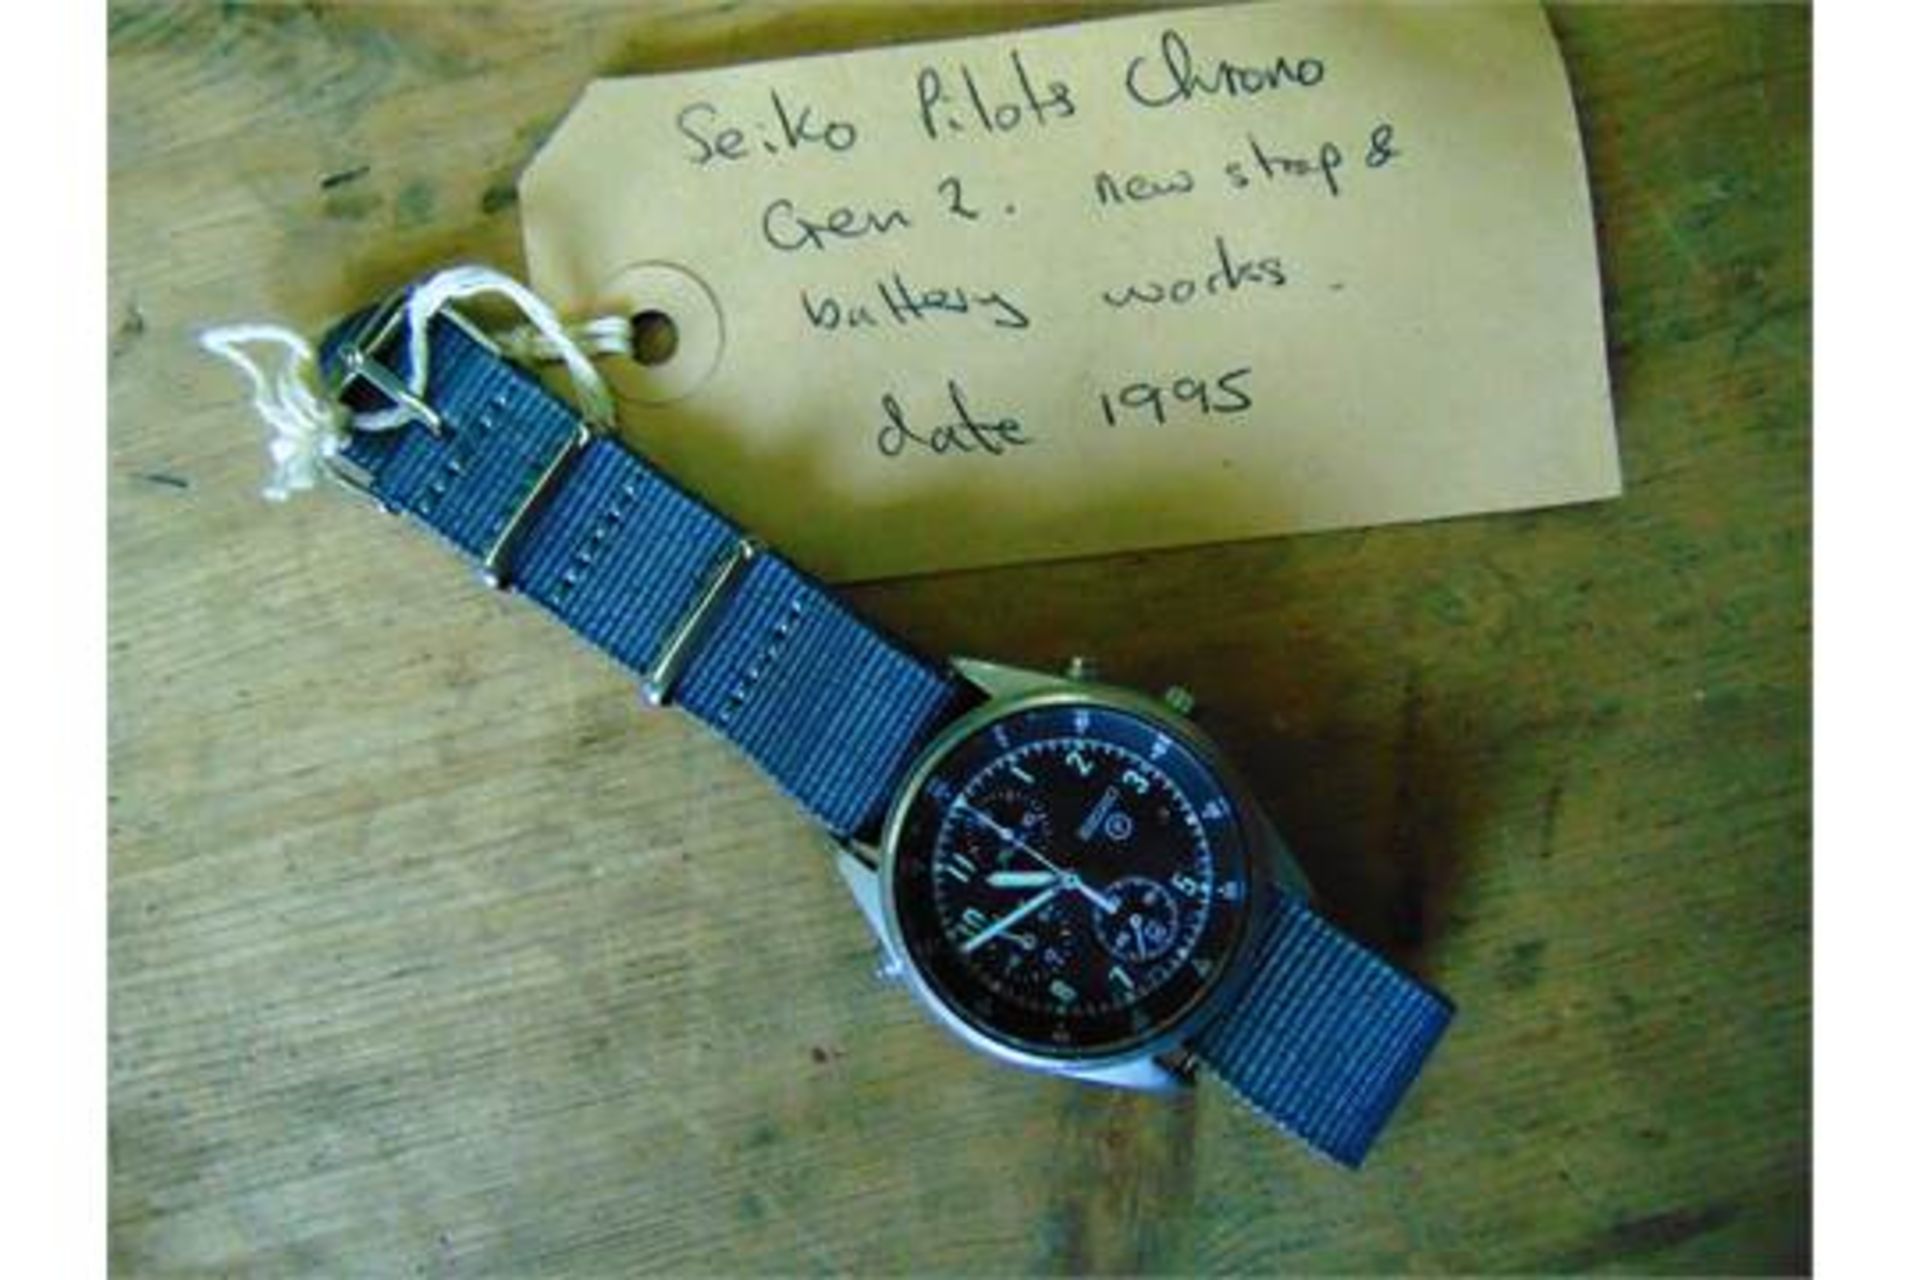 Seiko Pilots Chronograph generation 2 - Image 2 of 5